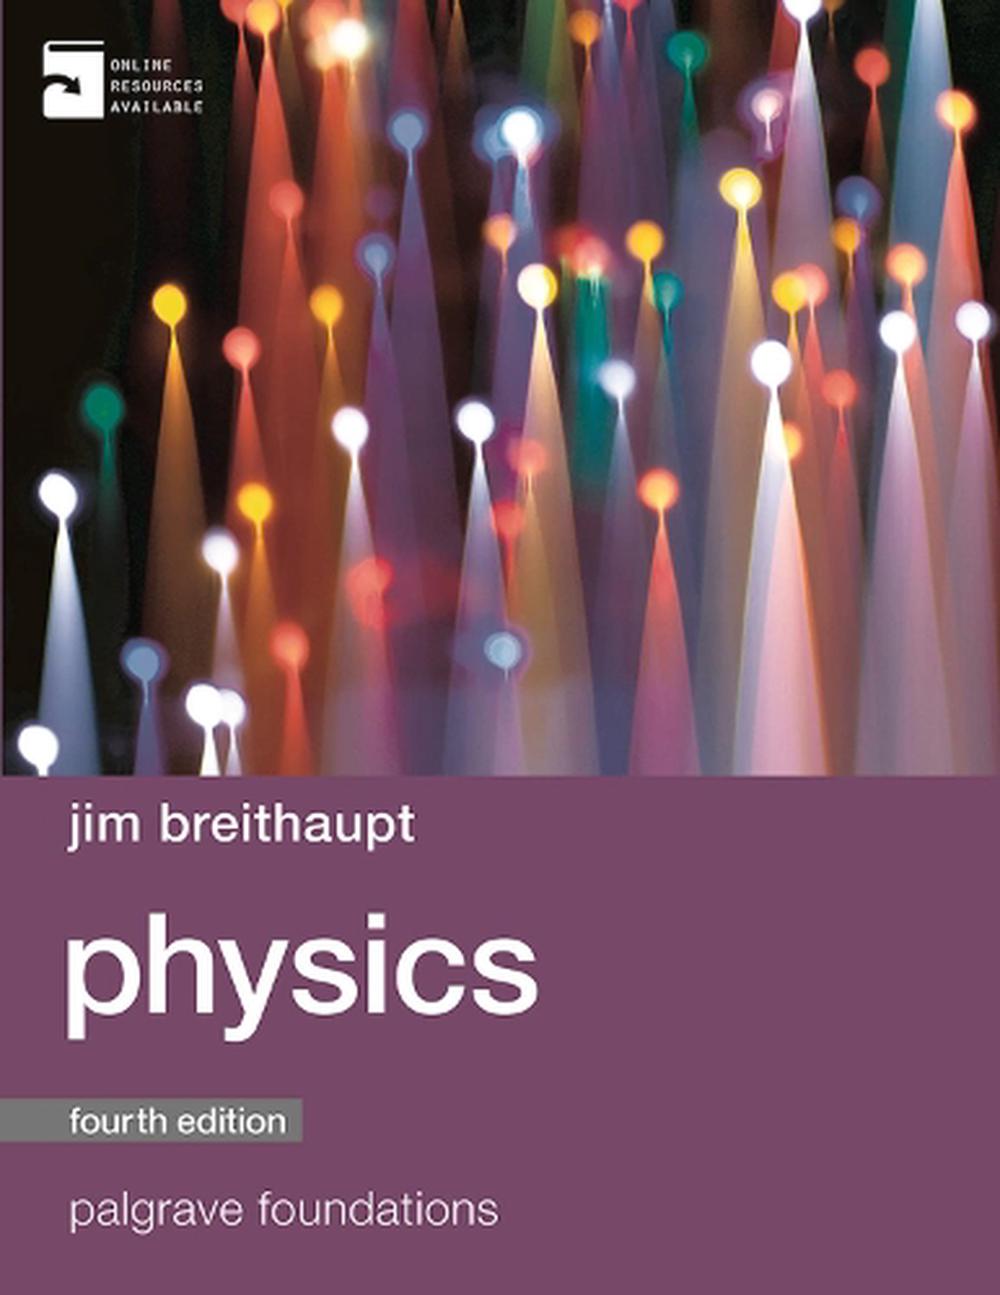 Physics by Jim Breithaupt (English) Paperback Book Free Shipping! 9781137443236 eBay